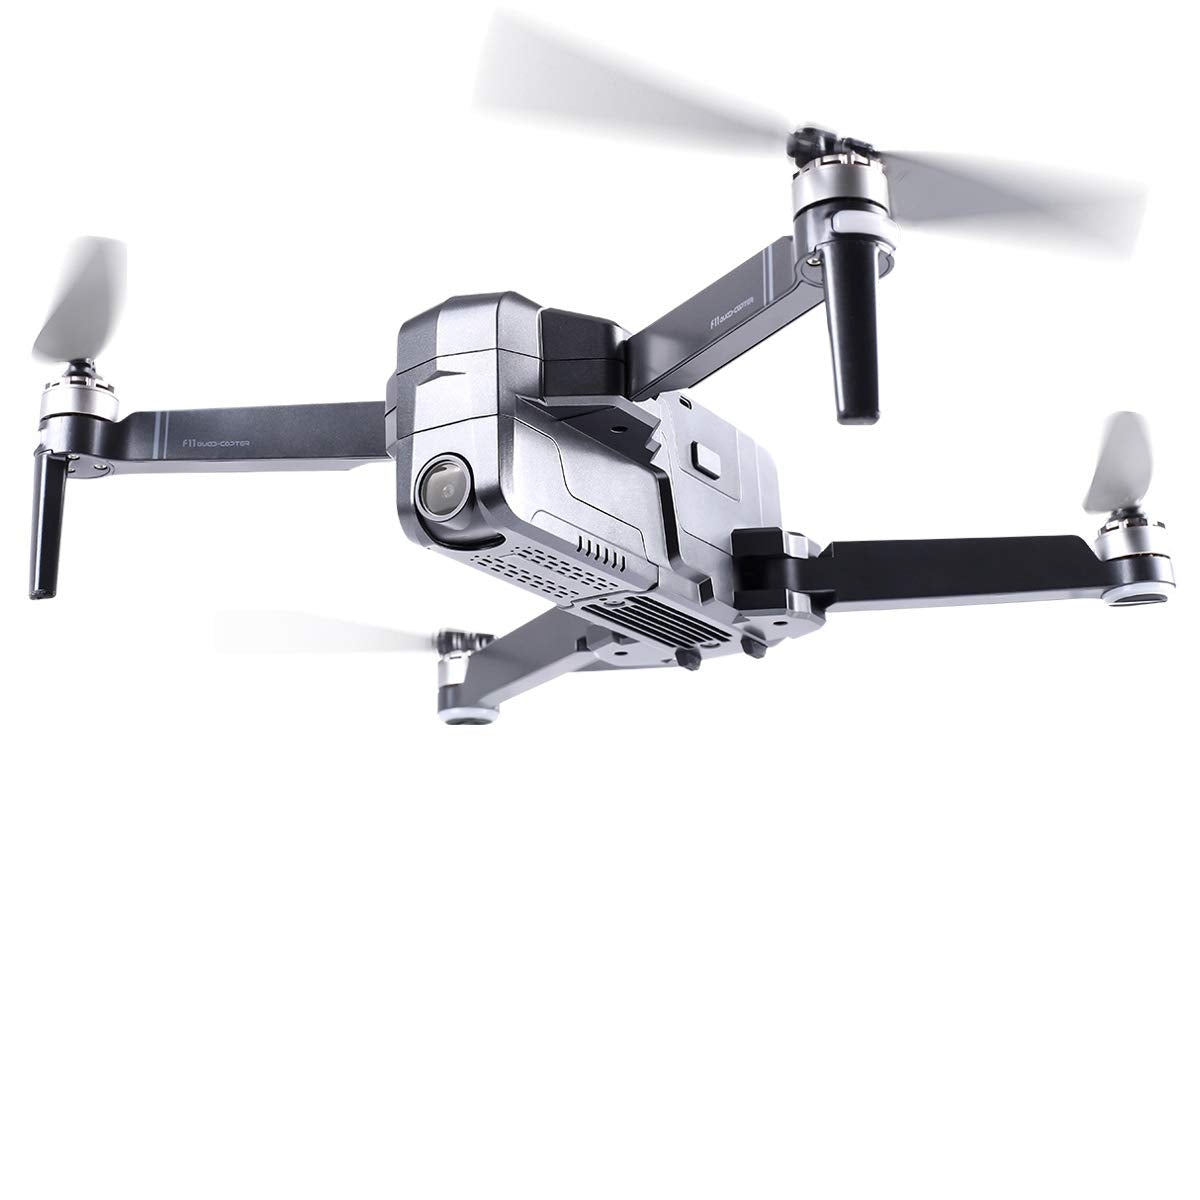 gps drone 4k